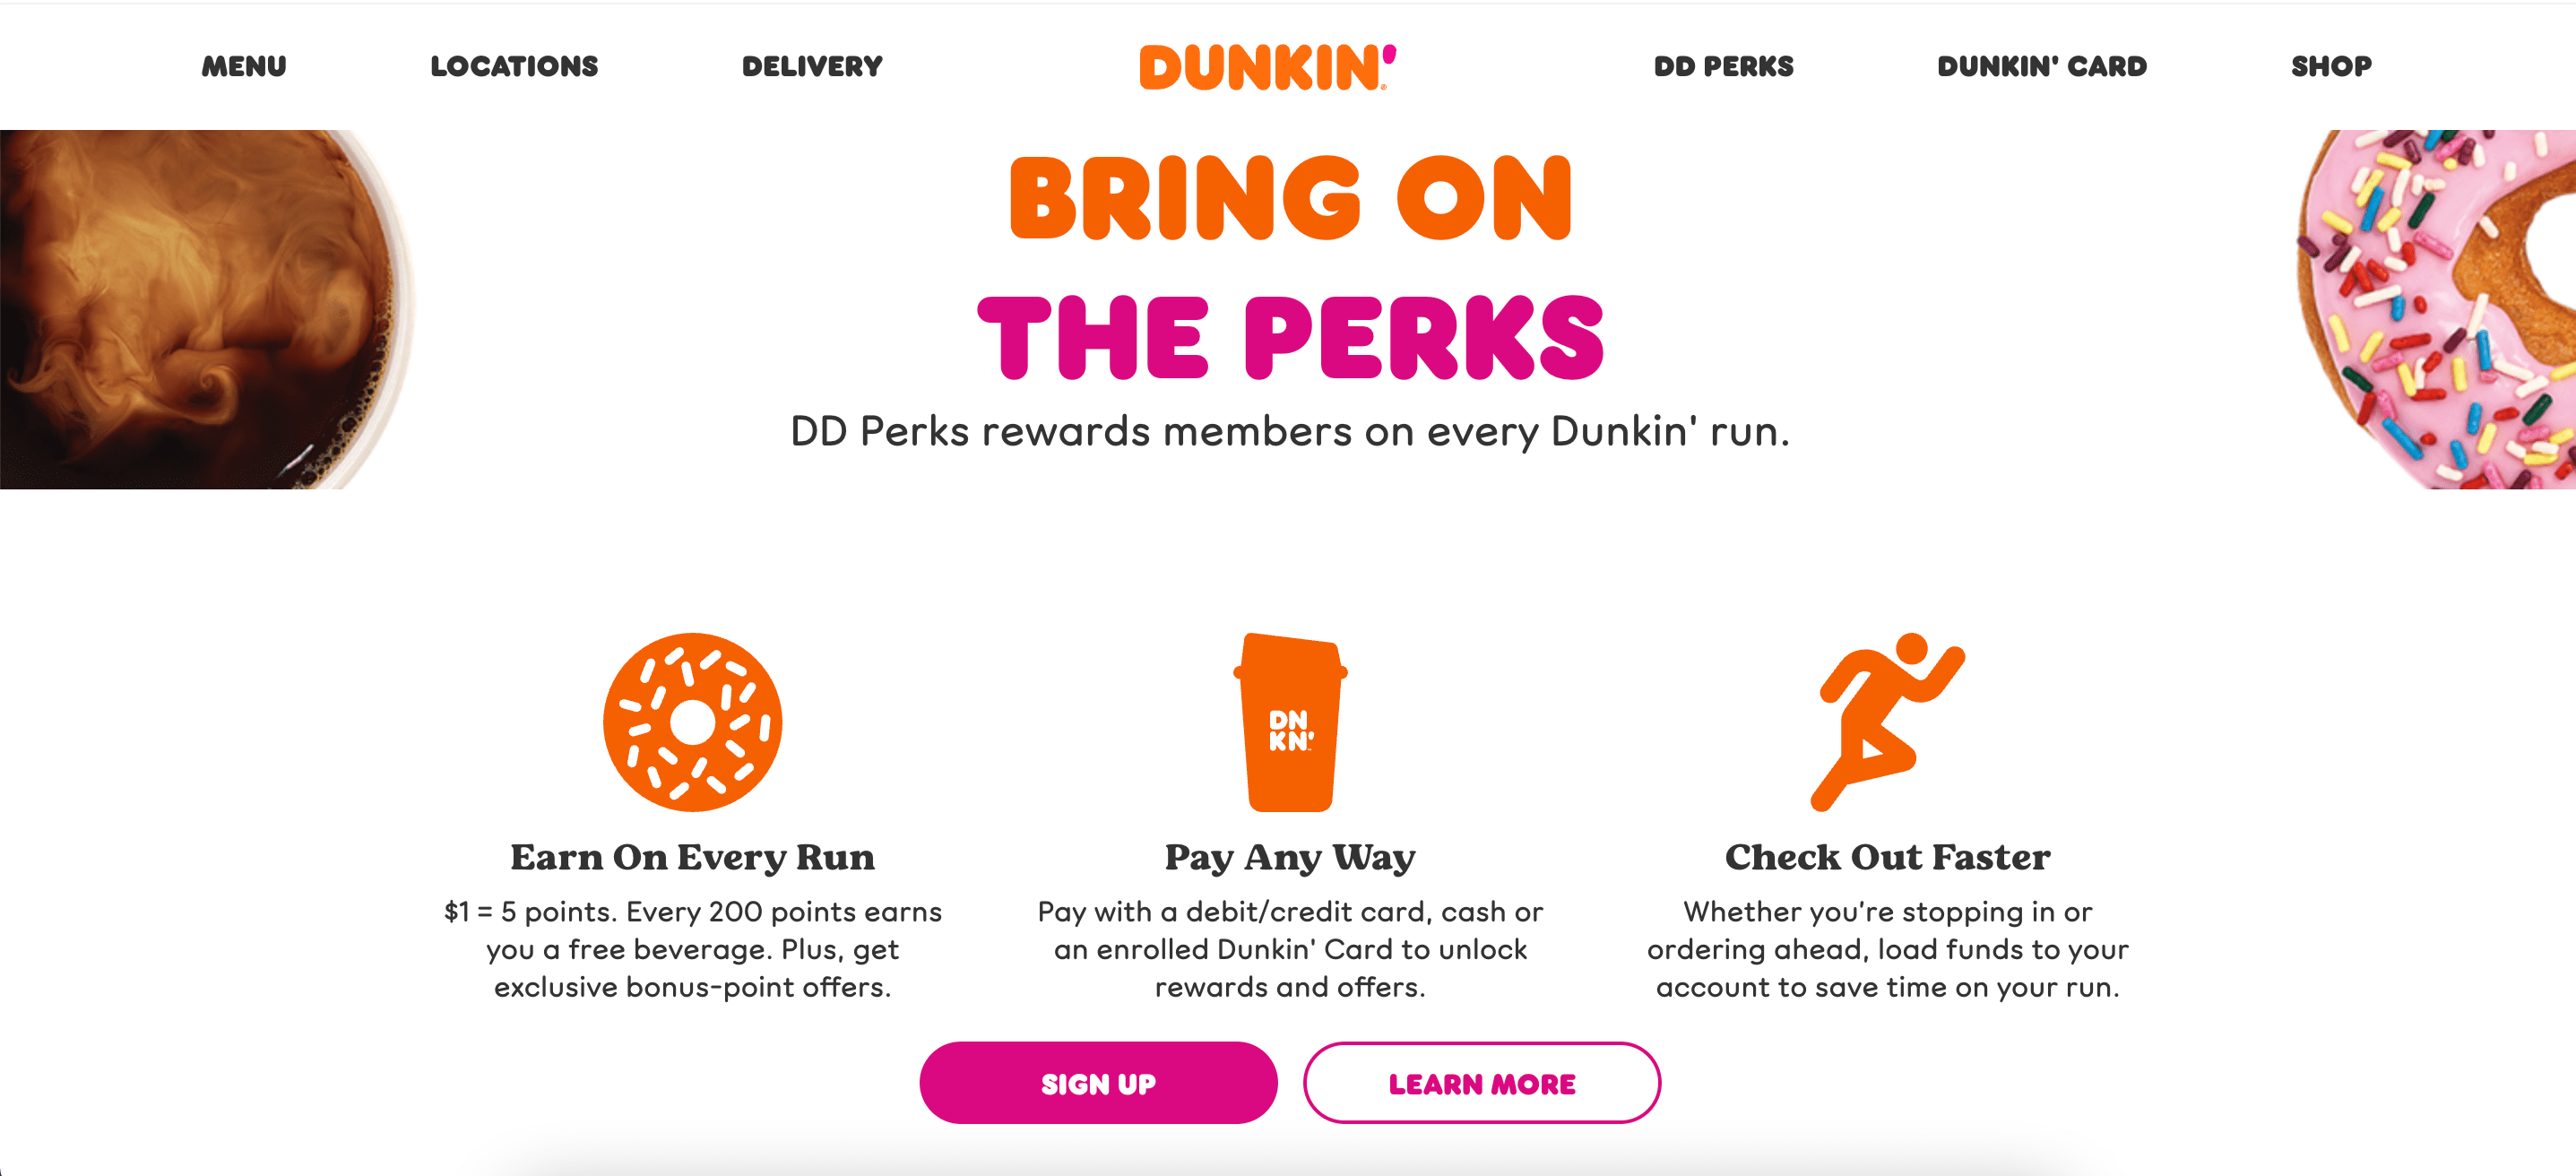 Dunkin donuts website